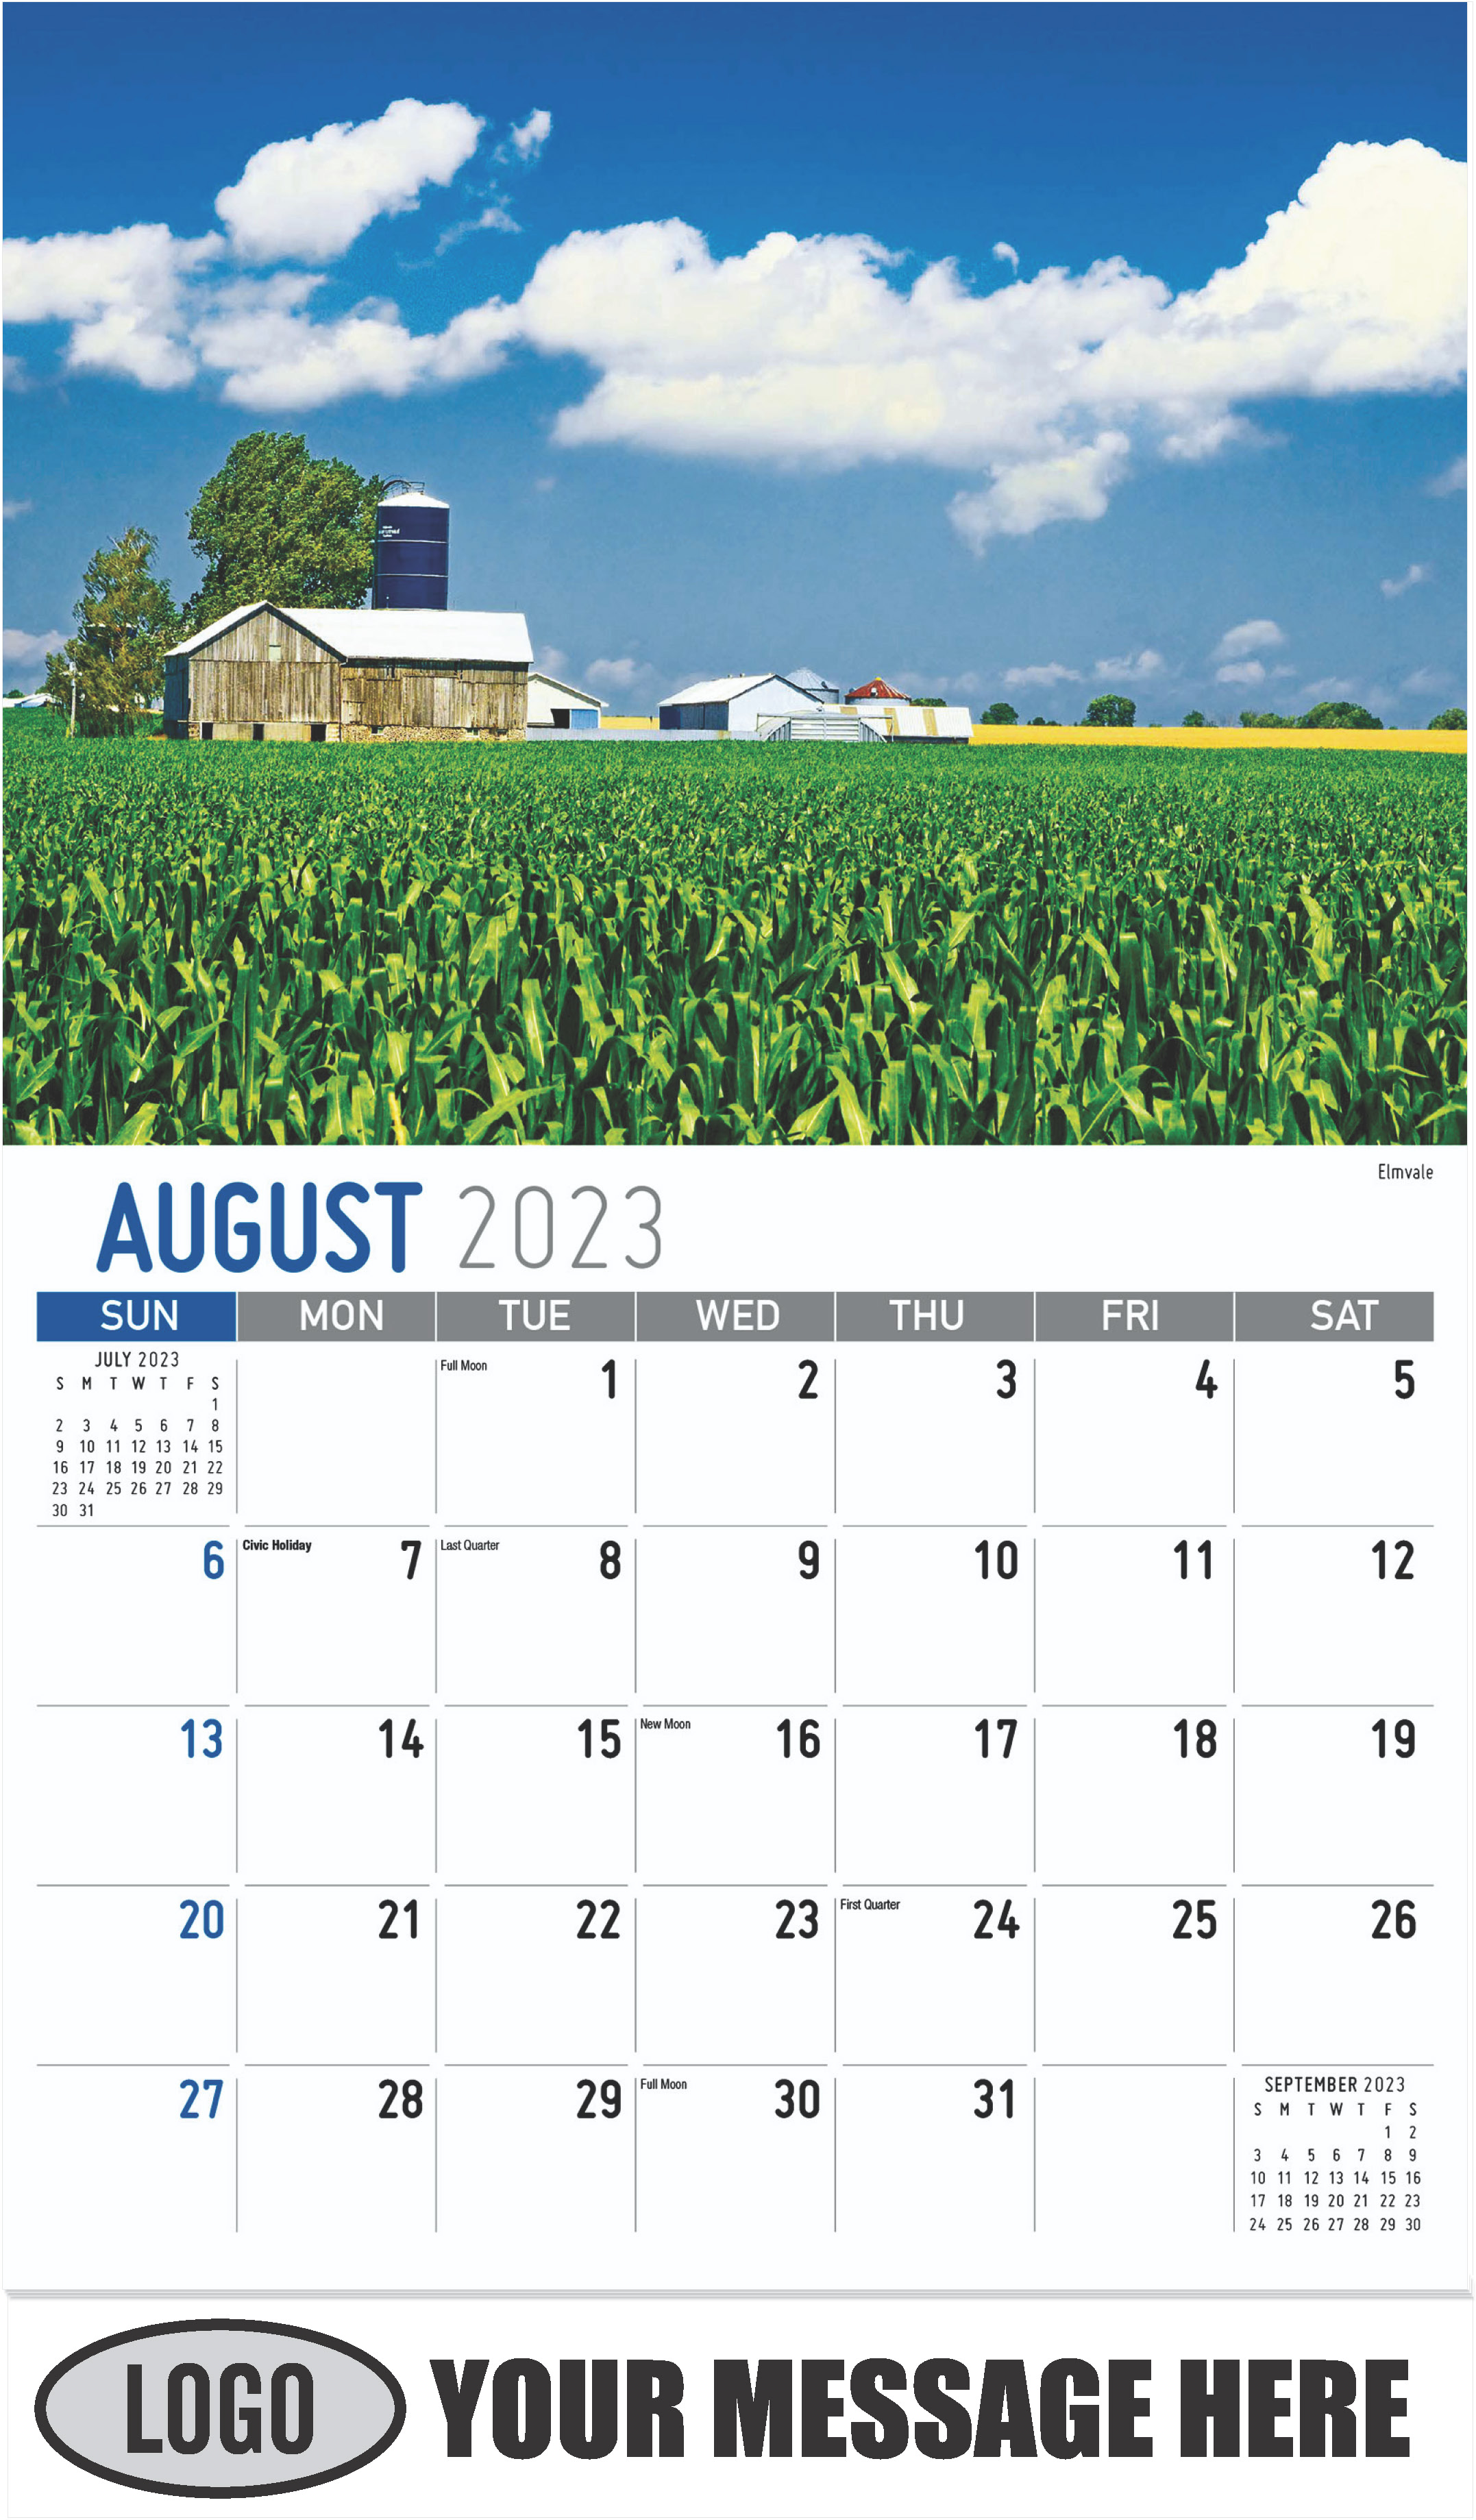 Elmvale - August - Scenes of Ontario 2023 Promotional Calendar